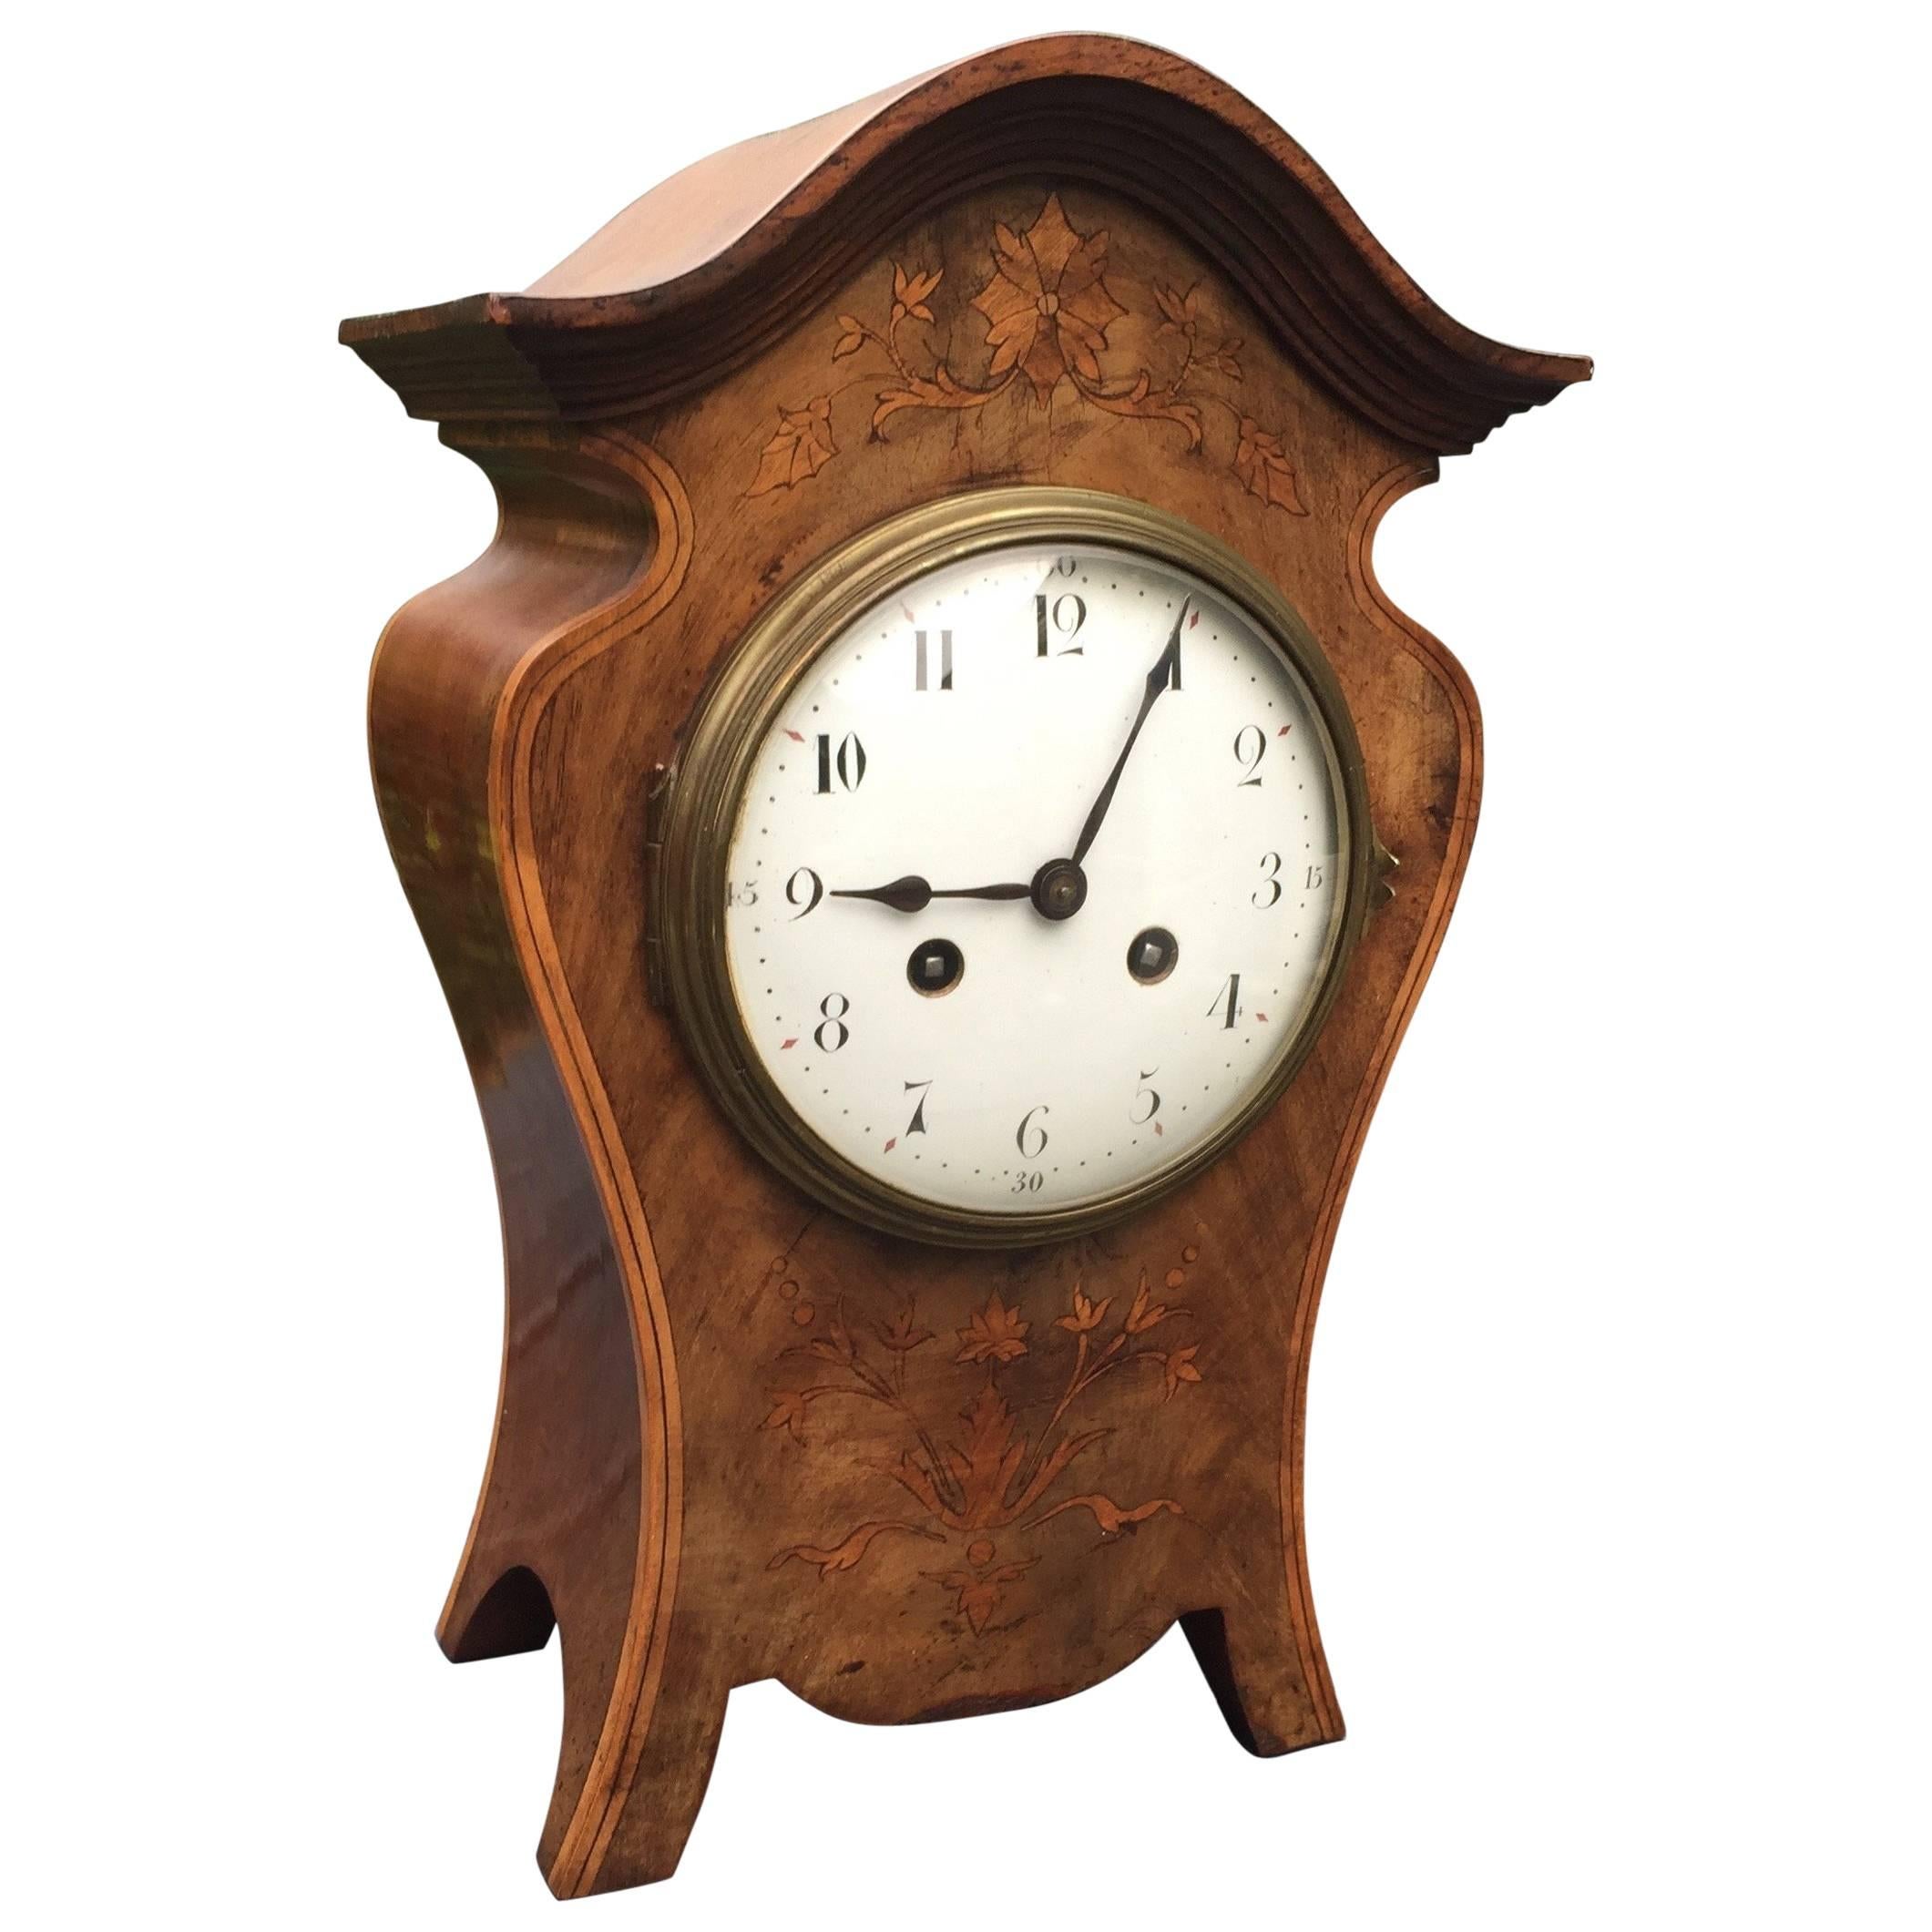 Elegant Art Nouveau Inlaid Nutwood Pendulum / Table Clock with Flower Motifs